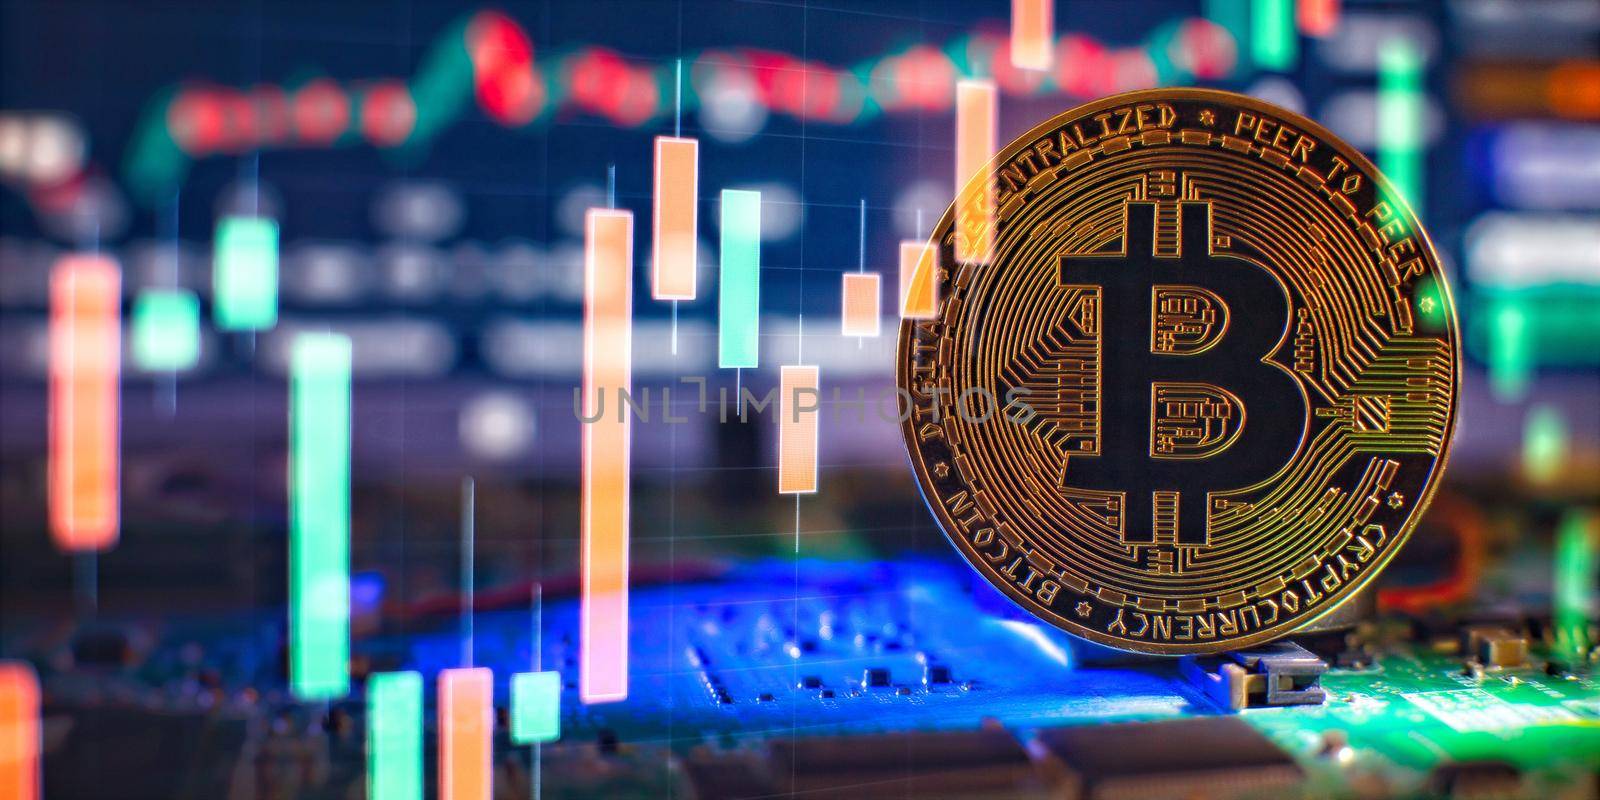 Blockchain technology bitcoin mining concept. Bitcoin golden coin on computer circuit board. banner copy space